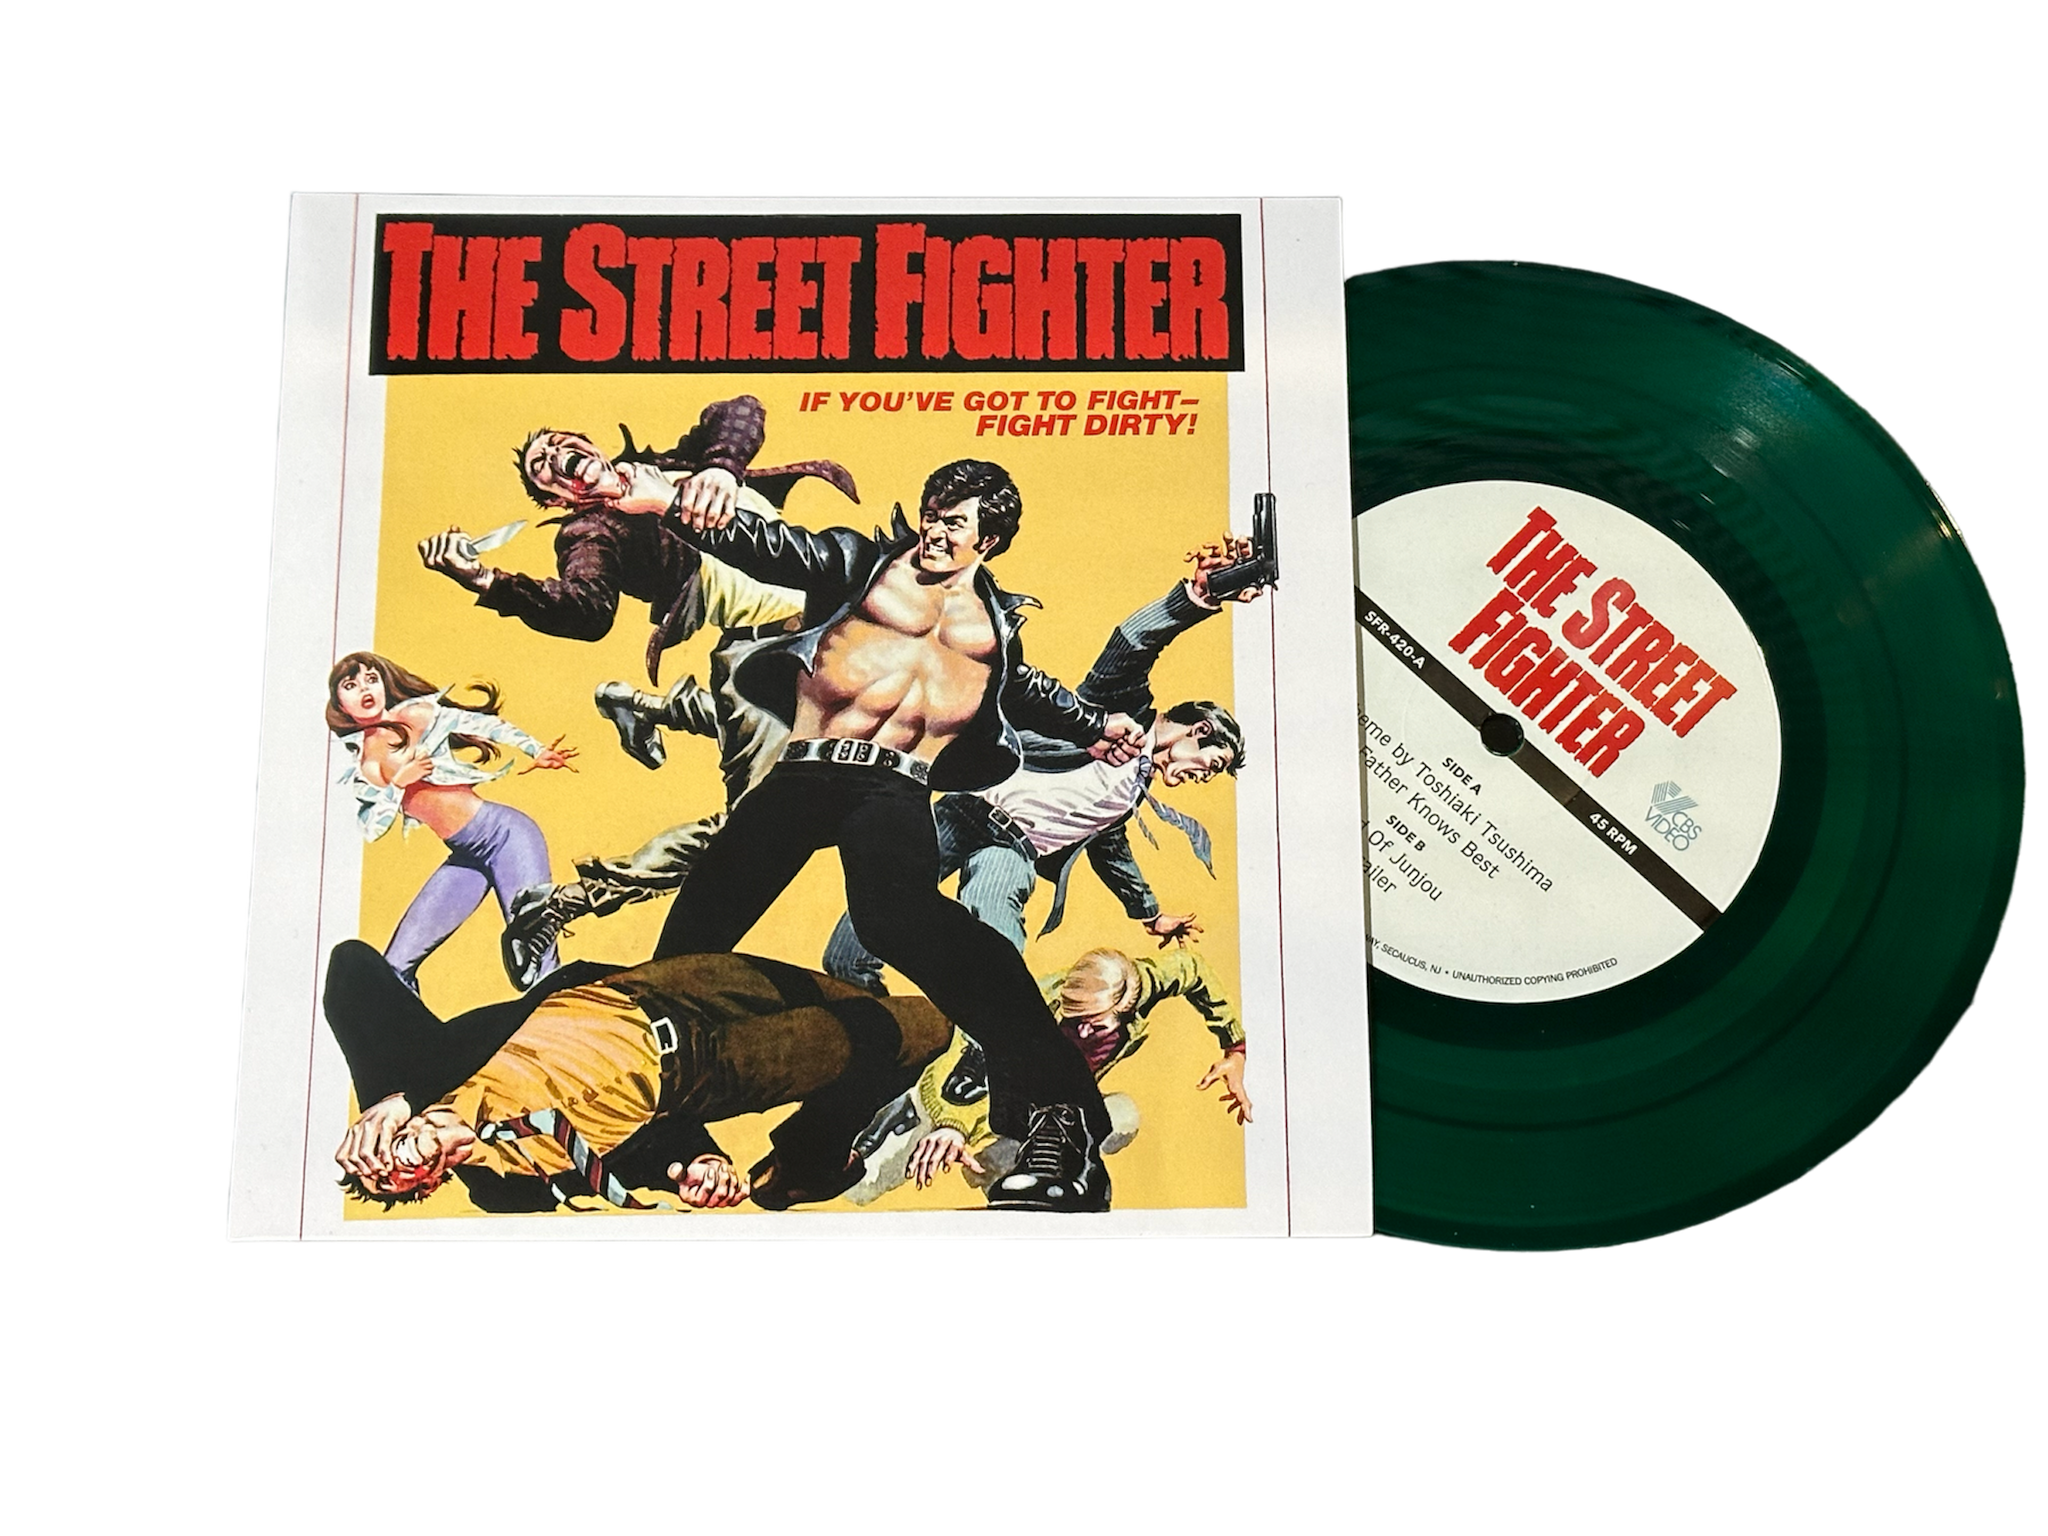 REGAL RECORDS - THE STREET FIGHTER  7" VINYL RECORD